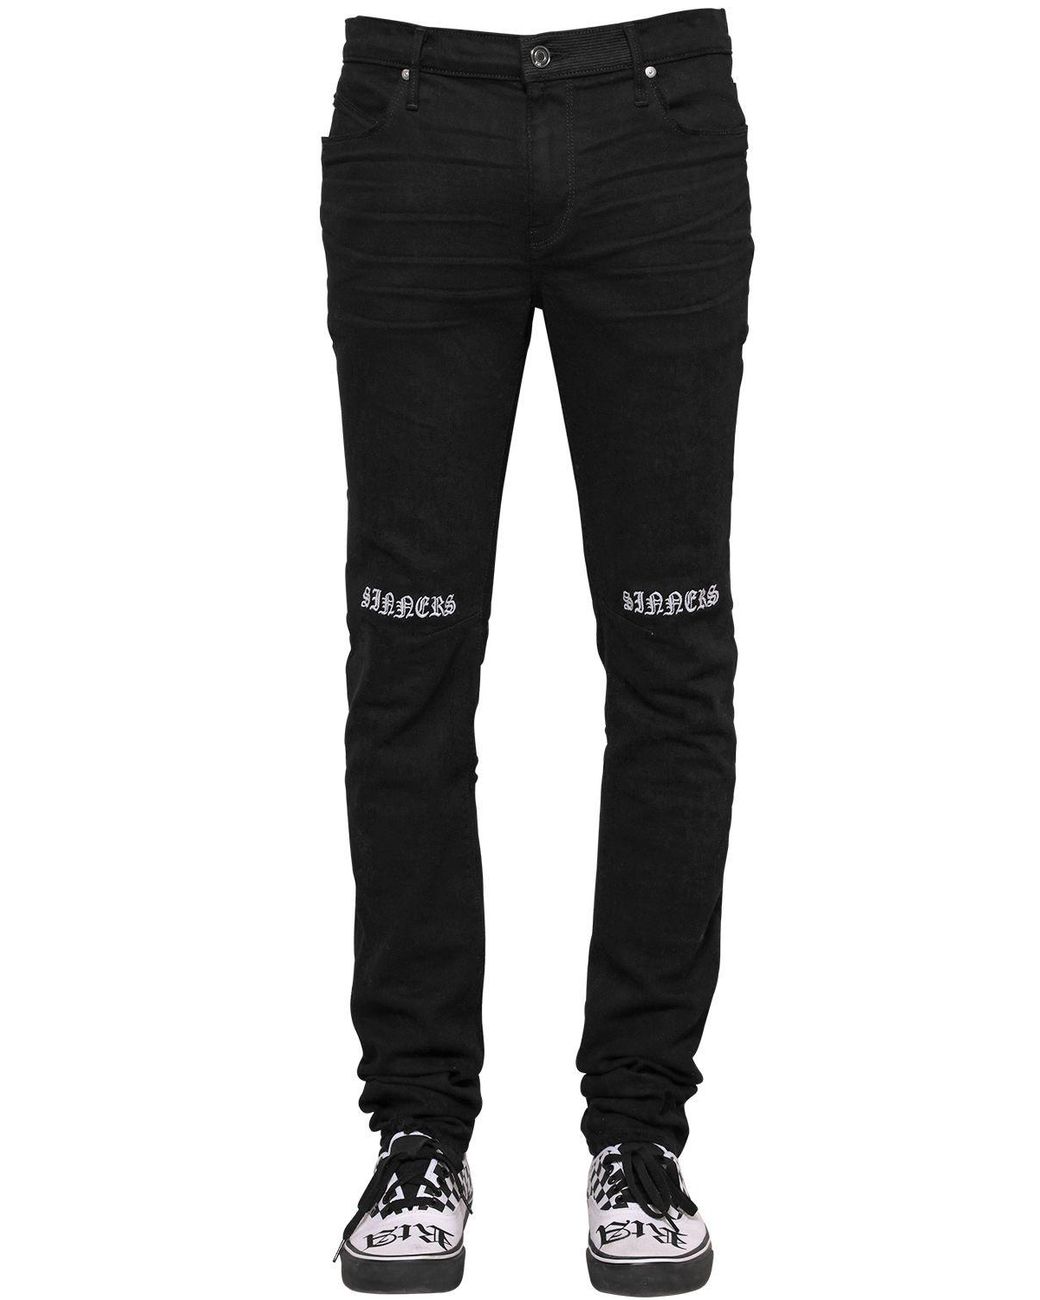 RtA Black Ripped Denim Jeans - Jeans